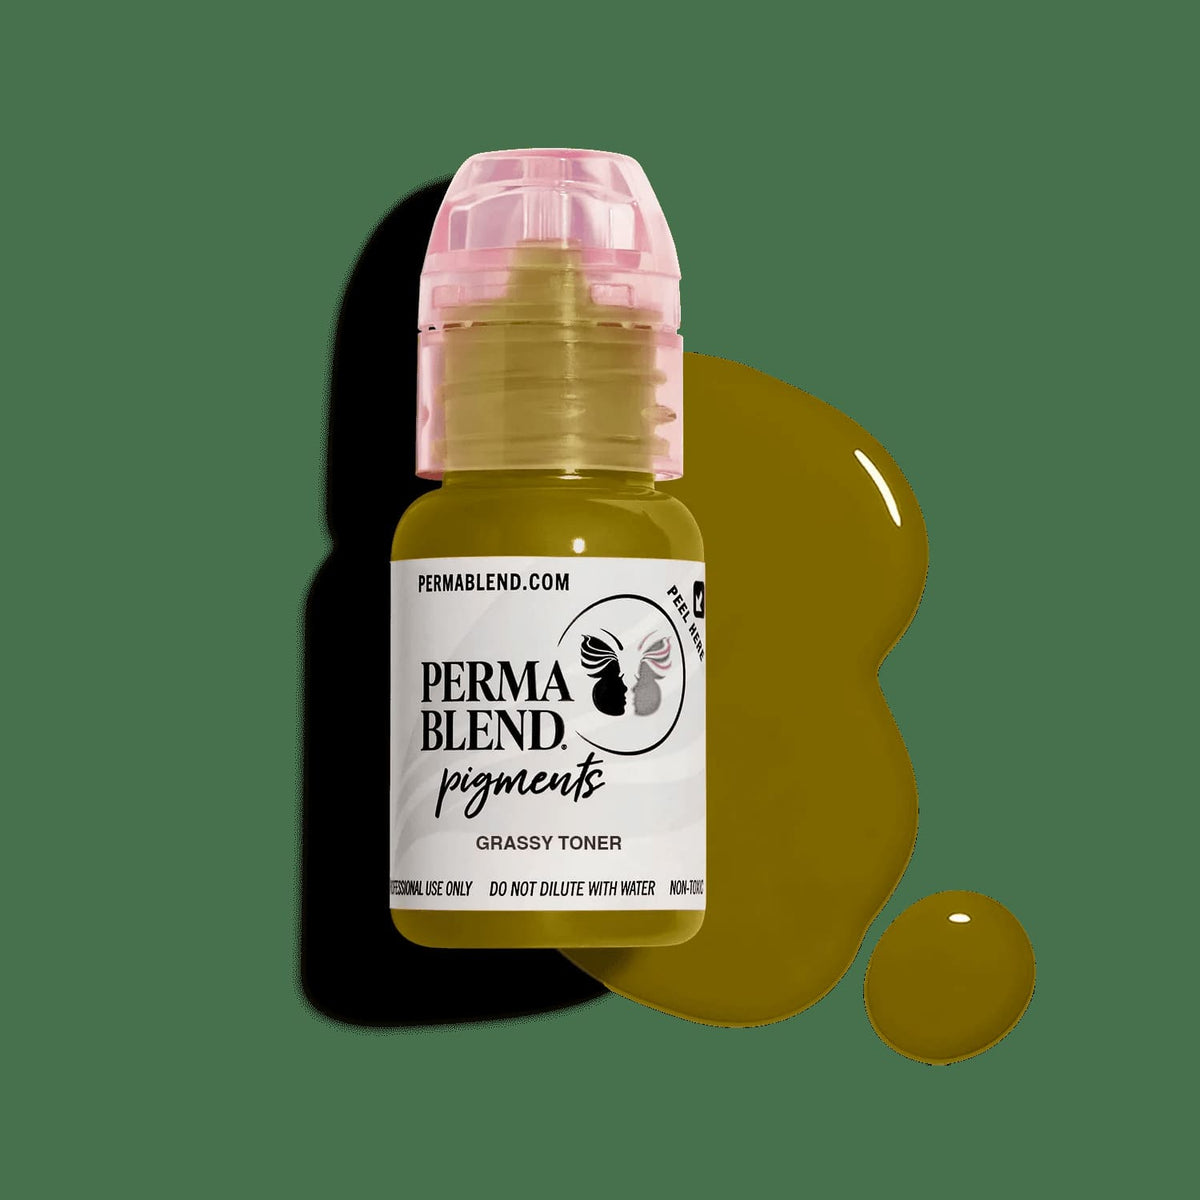 Perma Blend Grassy Toner PMU Pigment - Luna Beauty Supplies